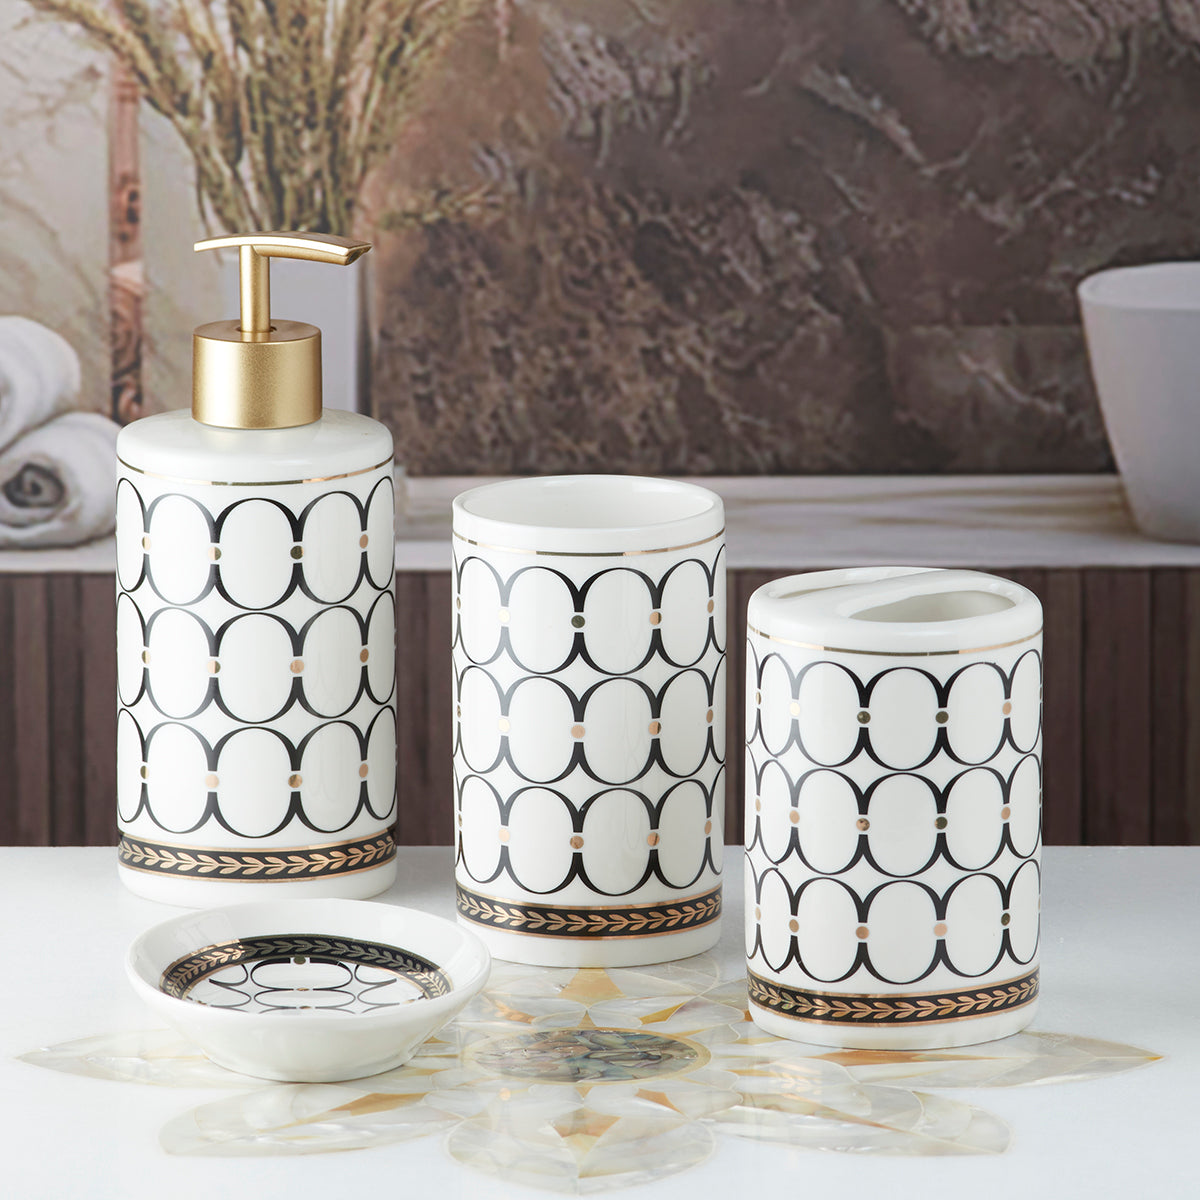 Ceramic Bathroom Accessories Set of 4 Bath Set with Soap Dispenser (10080)